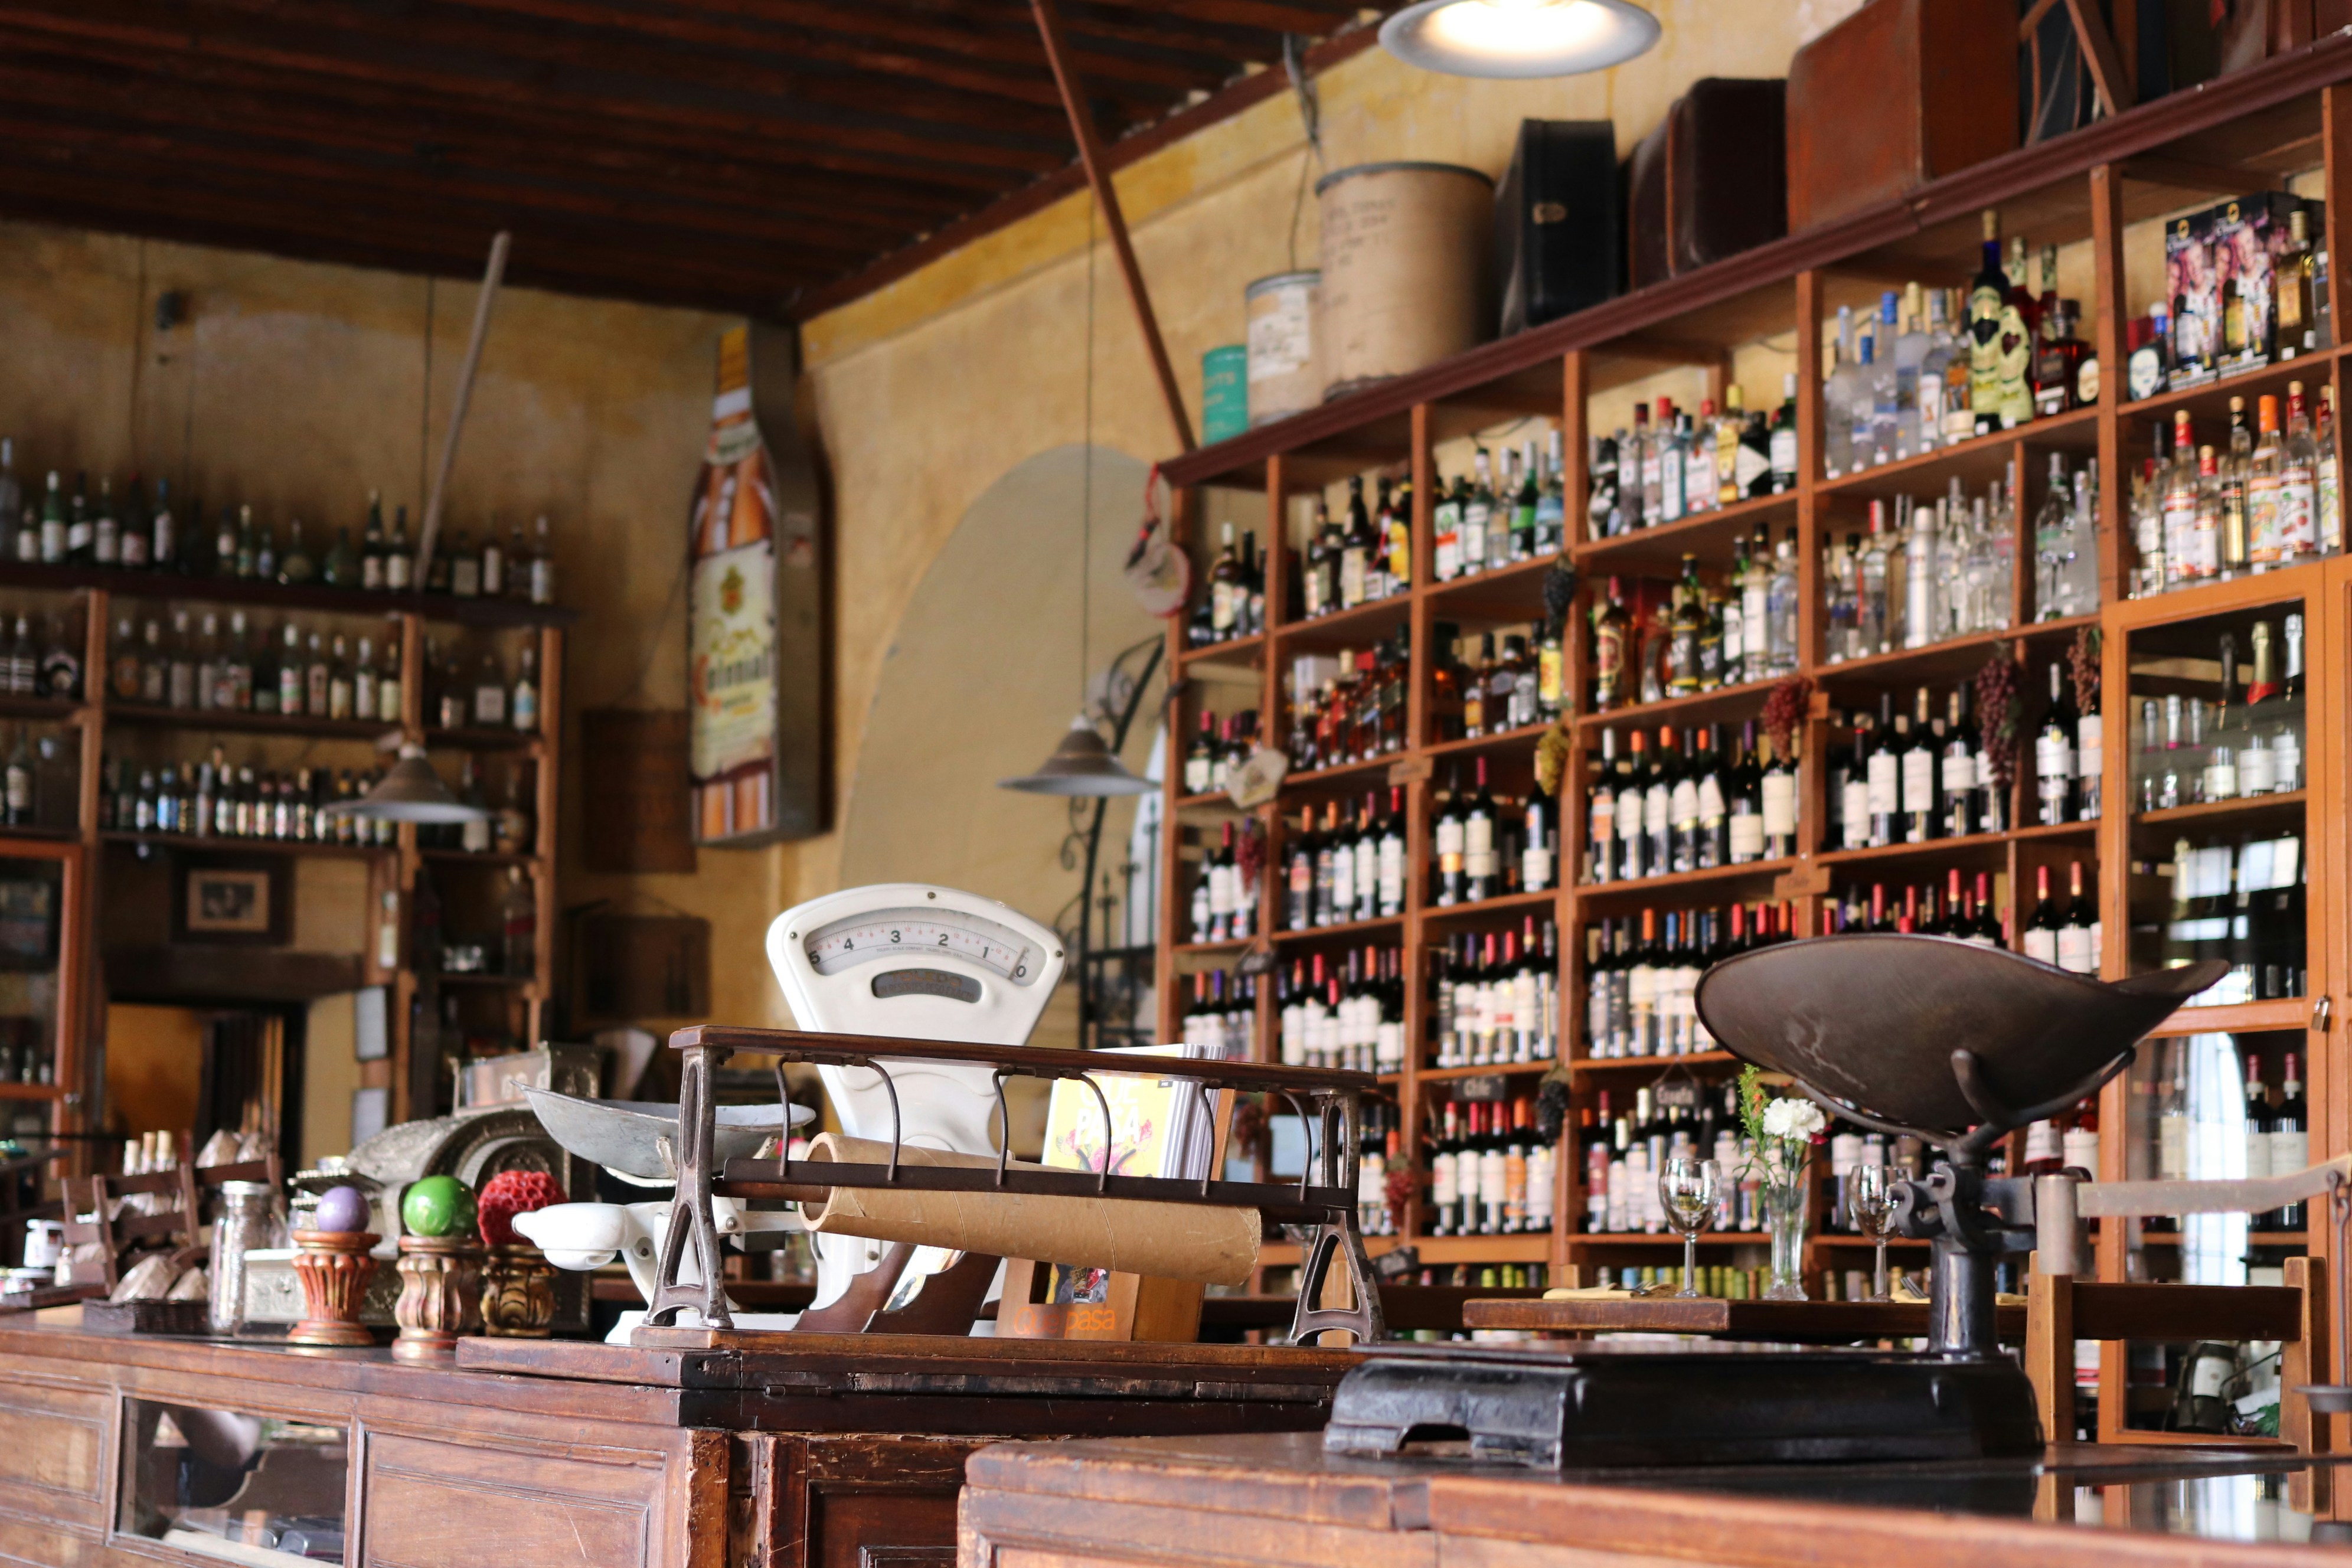 A picturesque old restaurant in Antigua, Guatemala